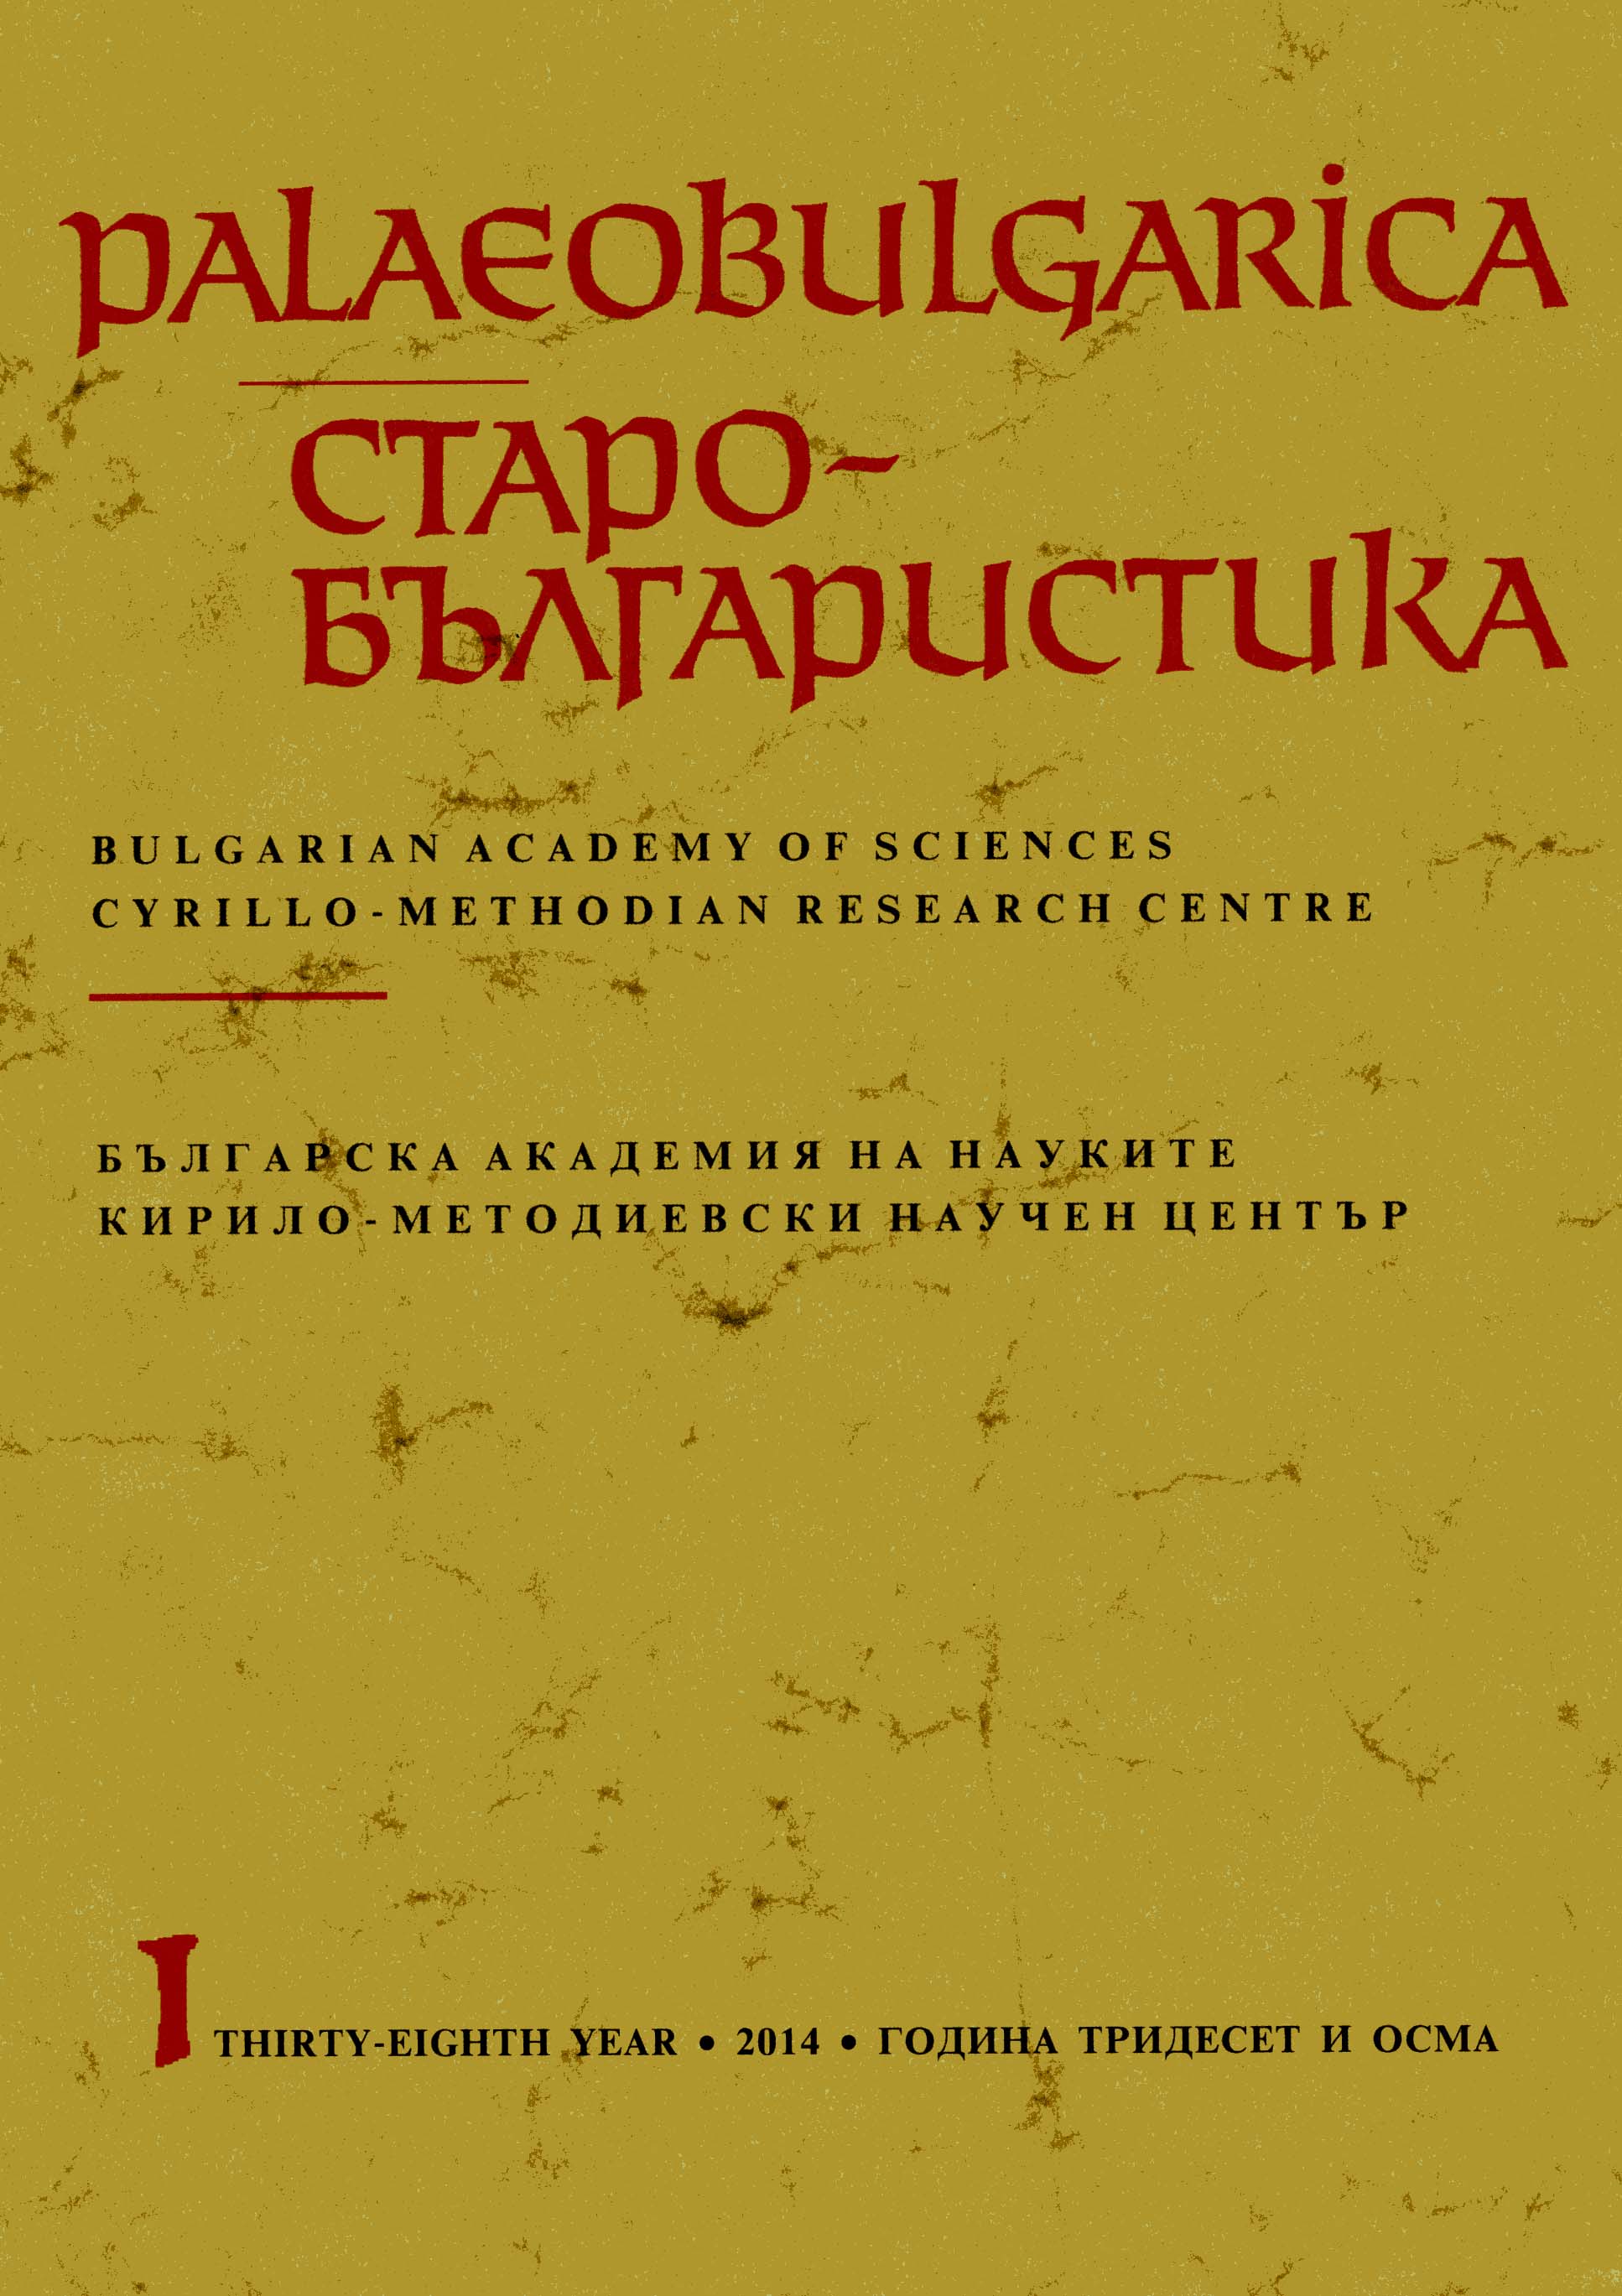 Exemplary New Edition of Istoriya Slavyanobalgarska Cover Image